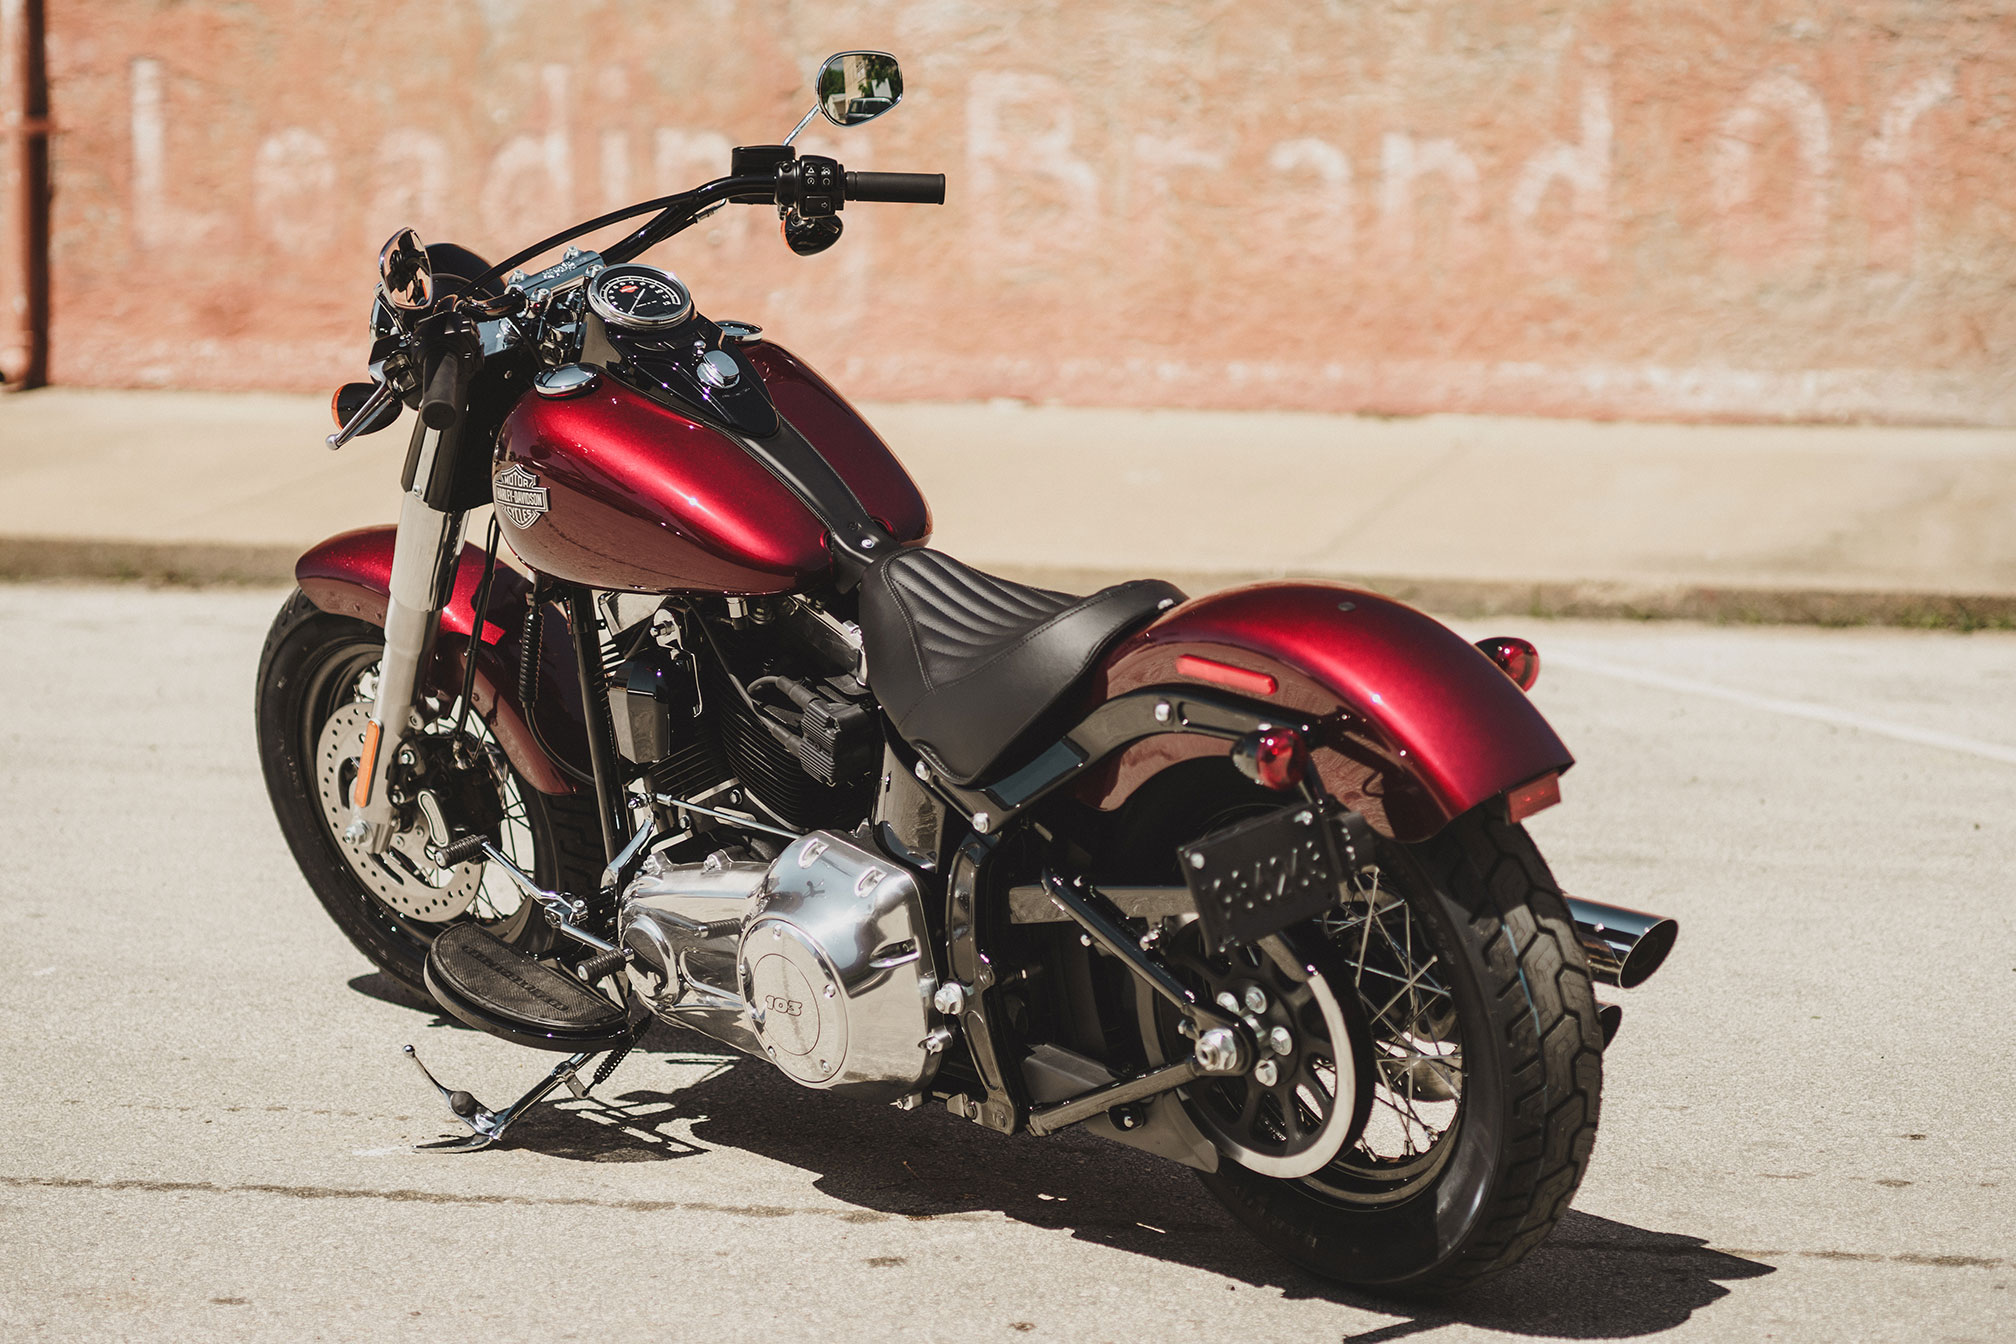 Harley-Davidson Softail Slim Backgrounds on Wallpapers Vista